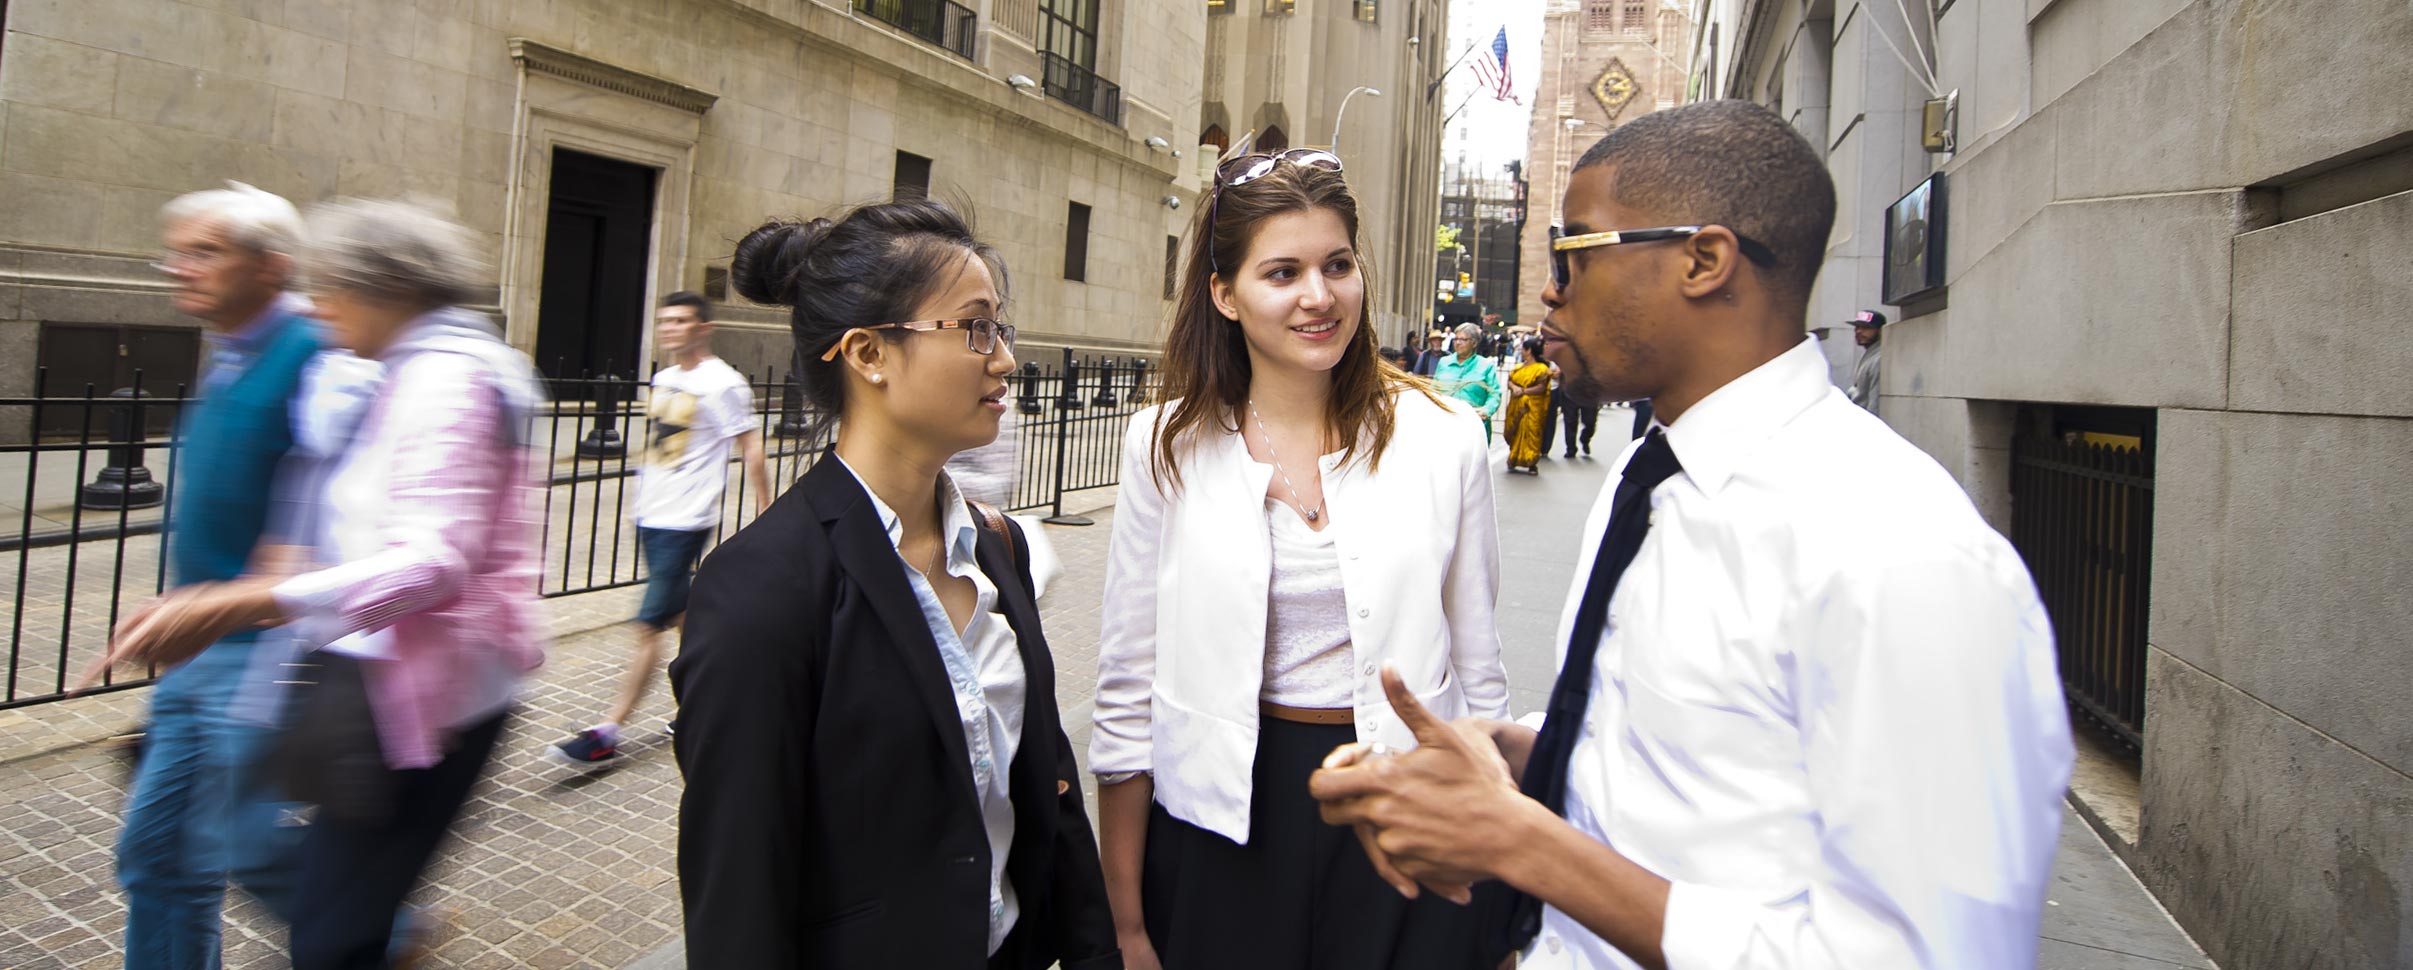 Three business students talking on city street